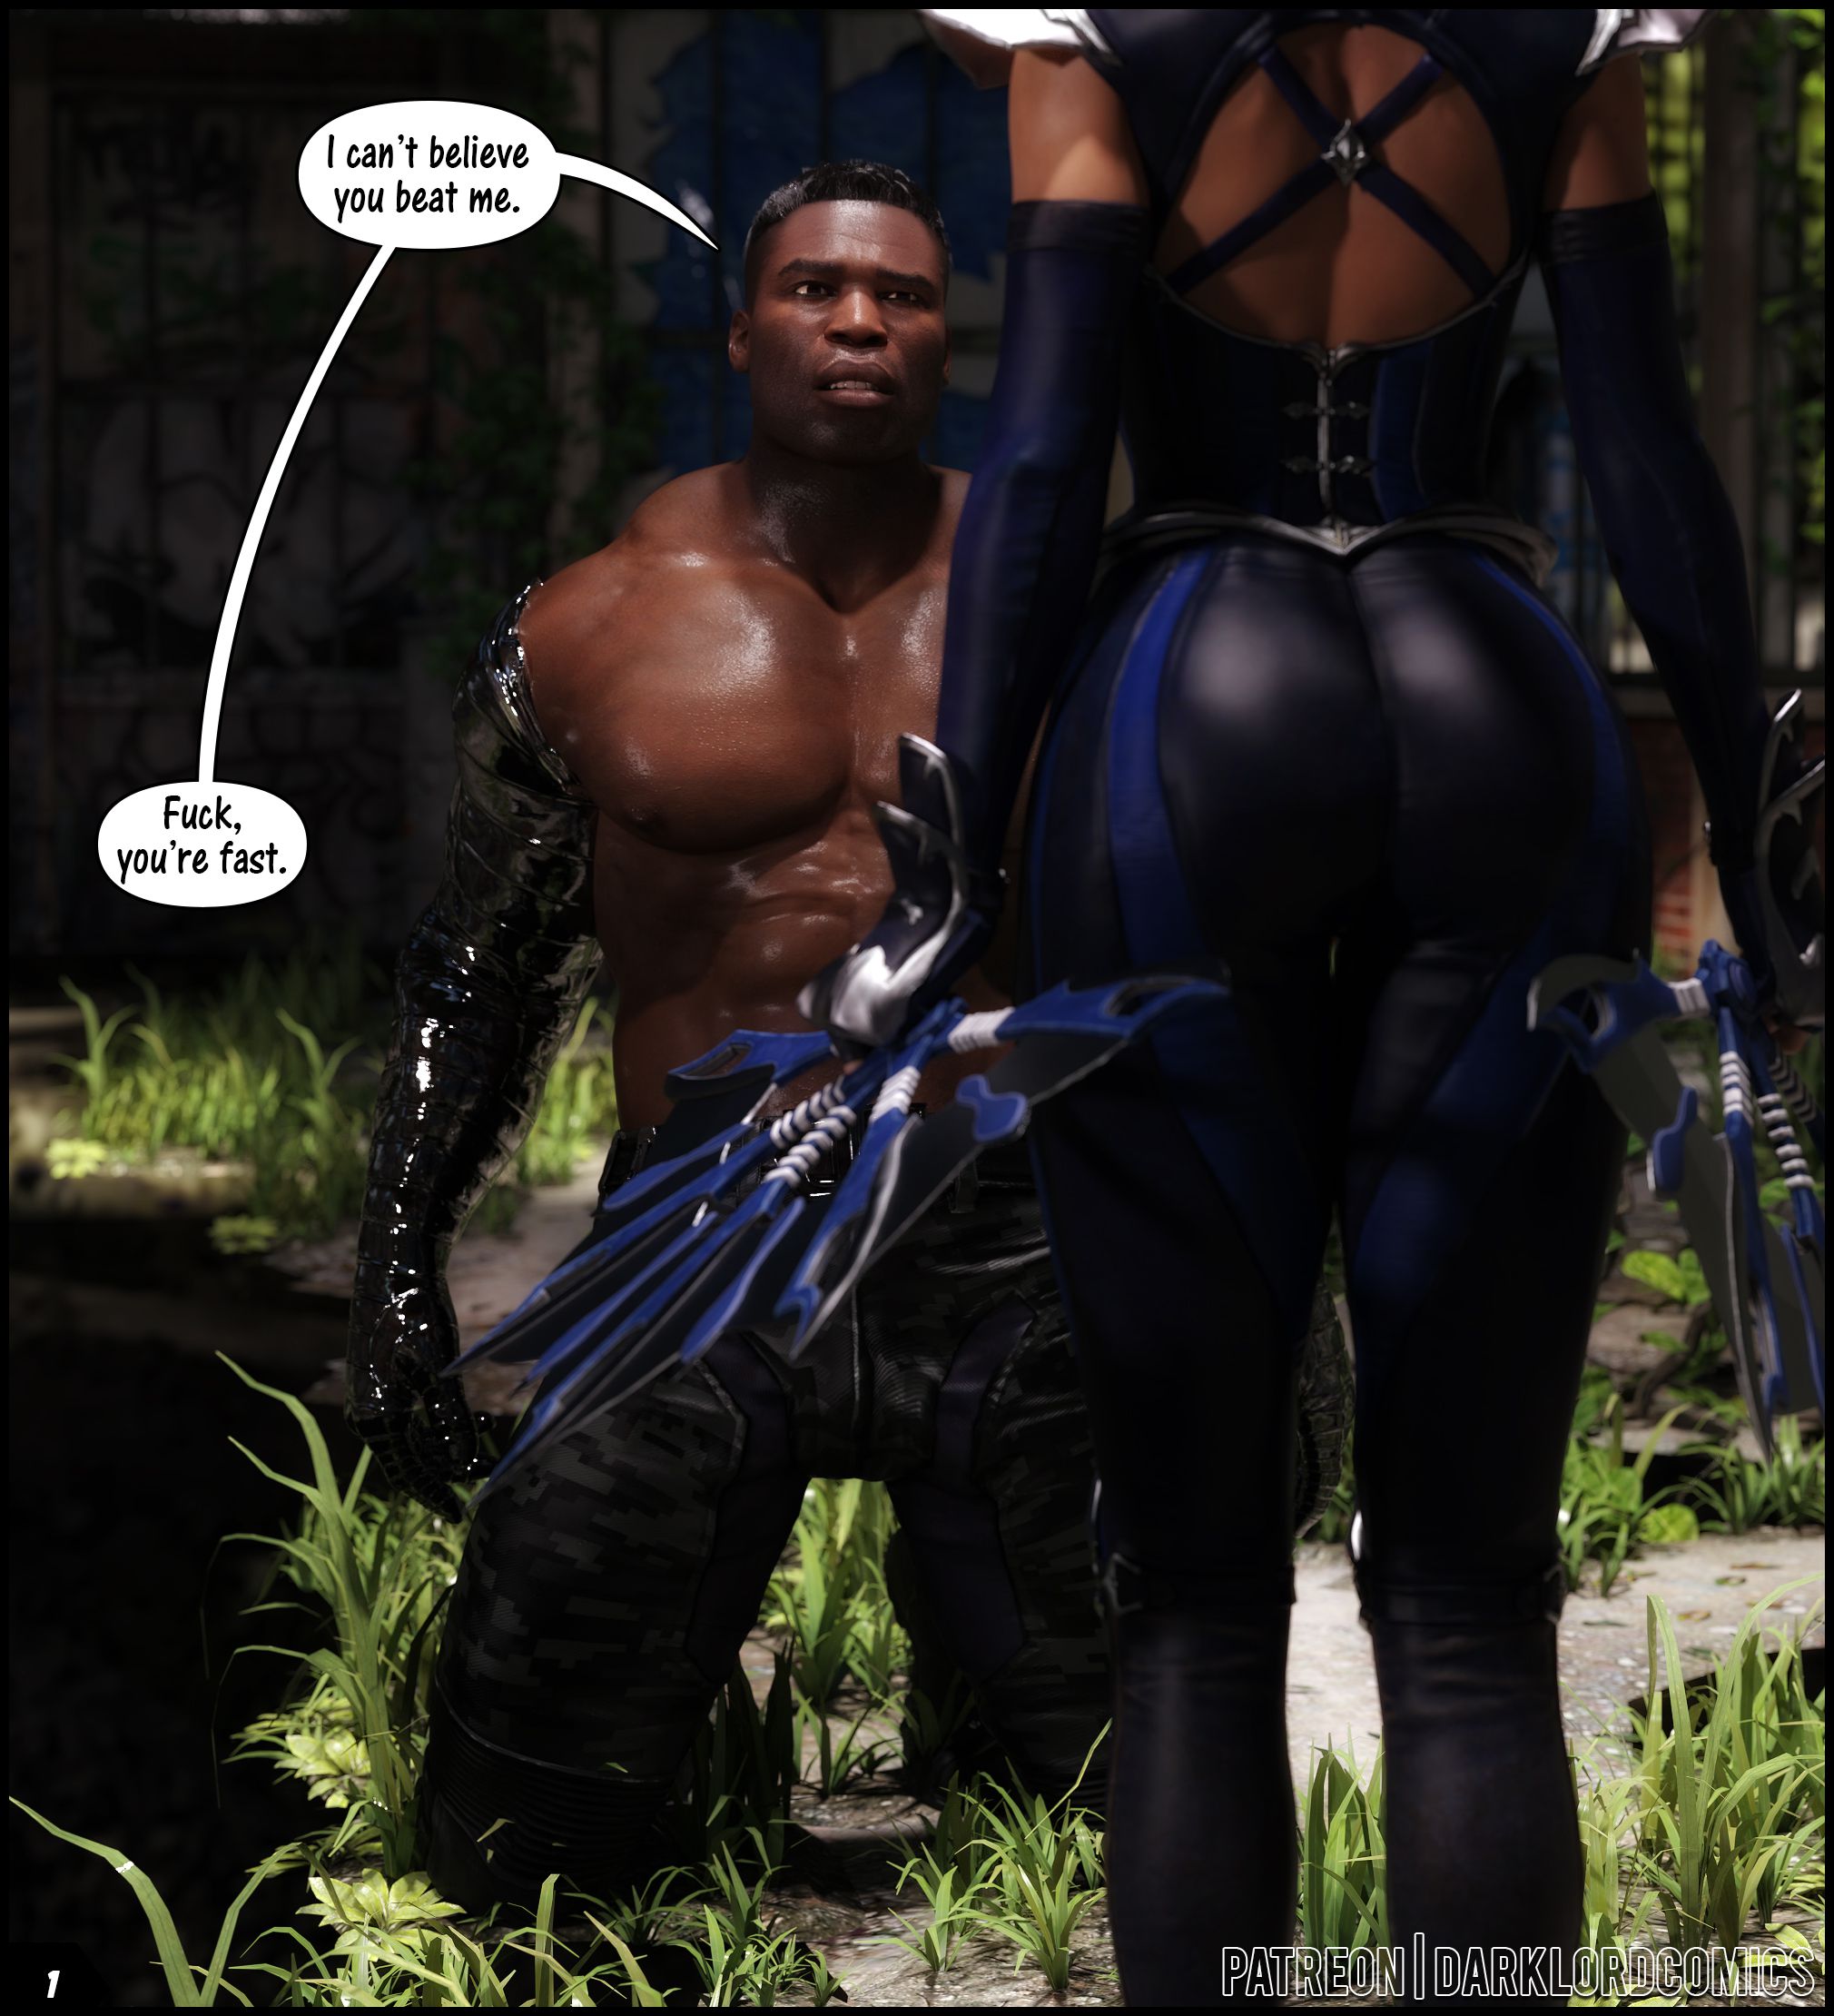 Mortal kombat porn comic